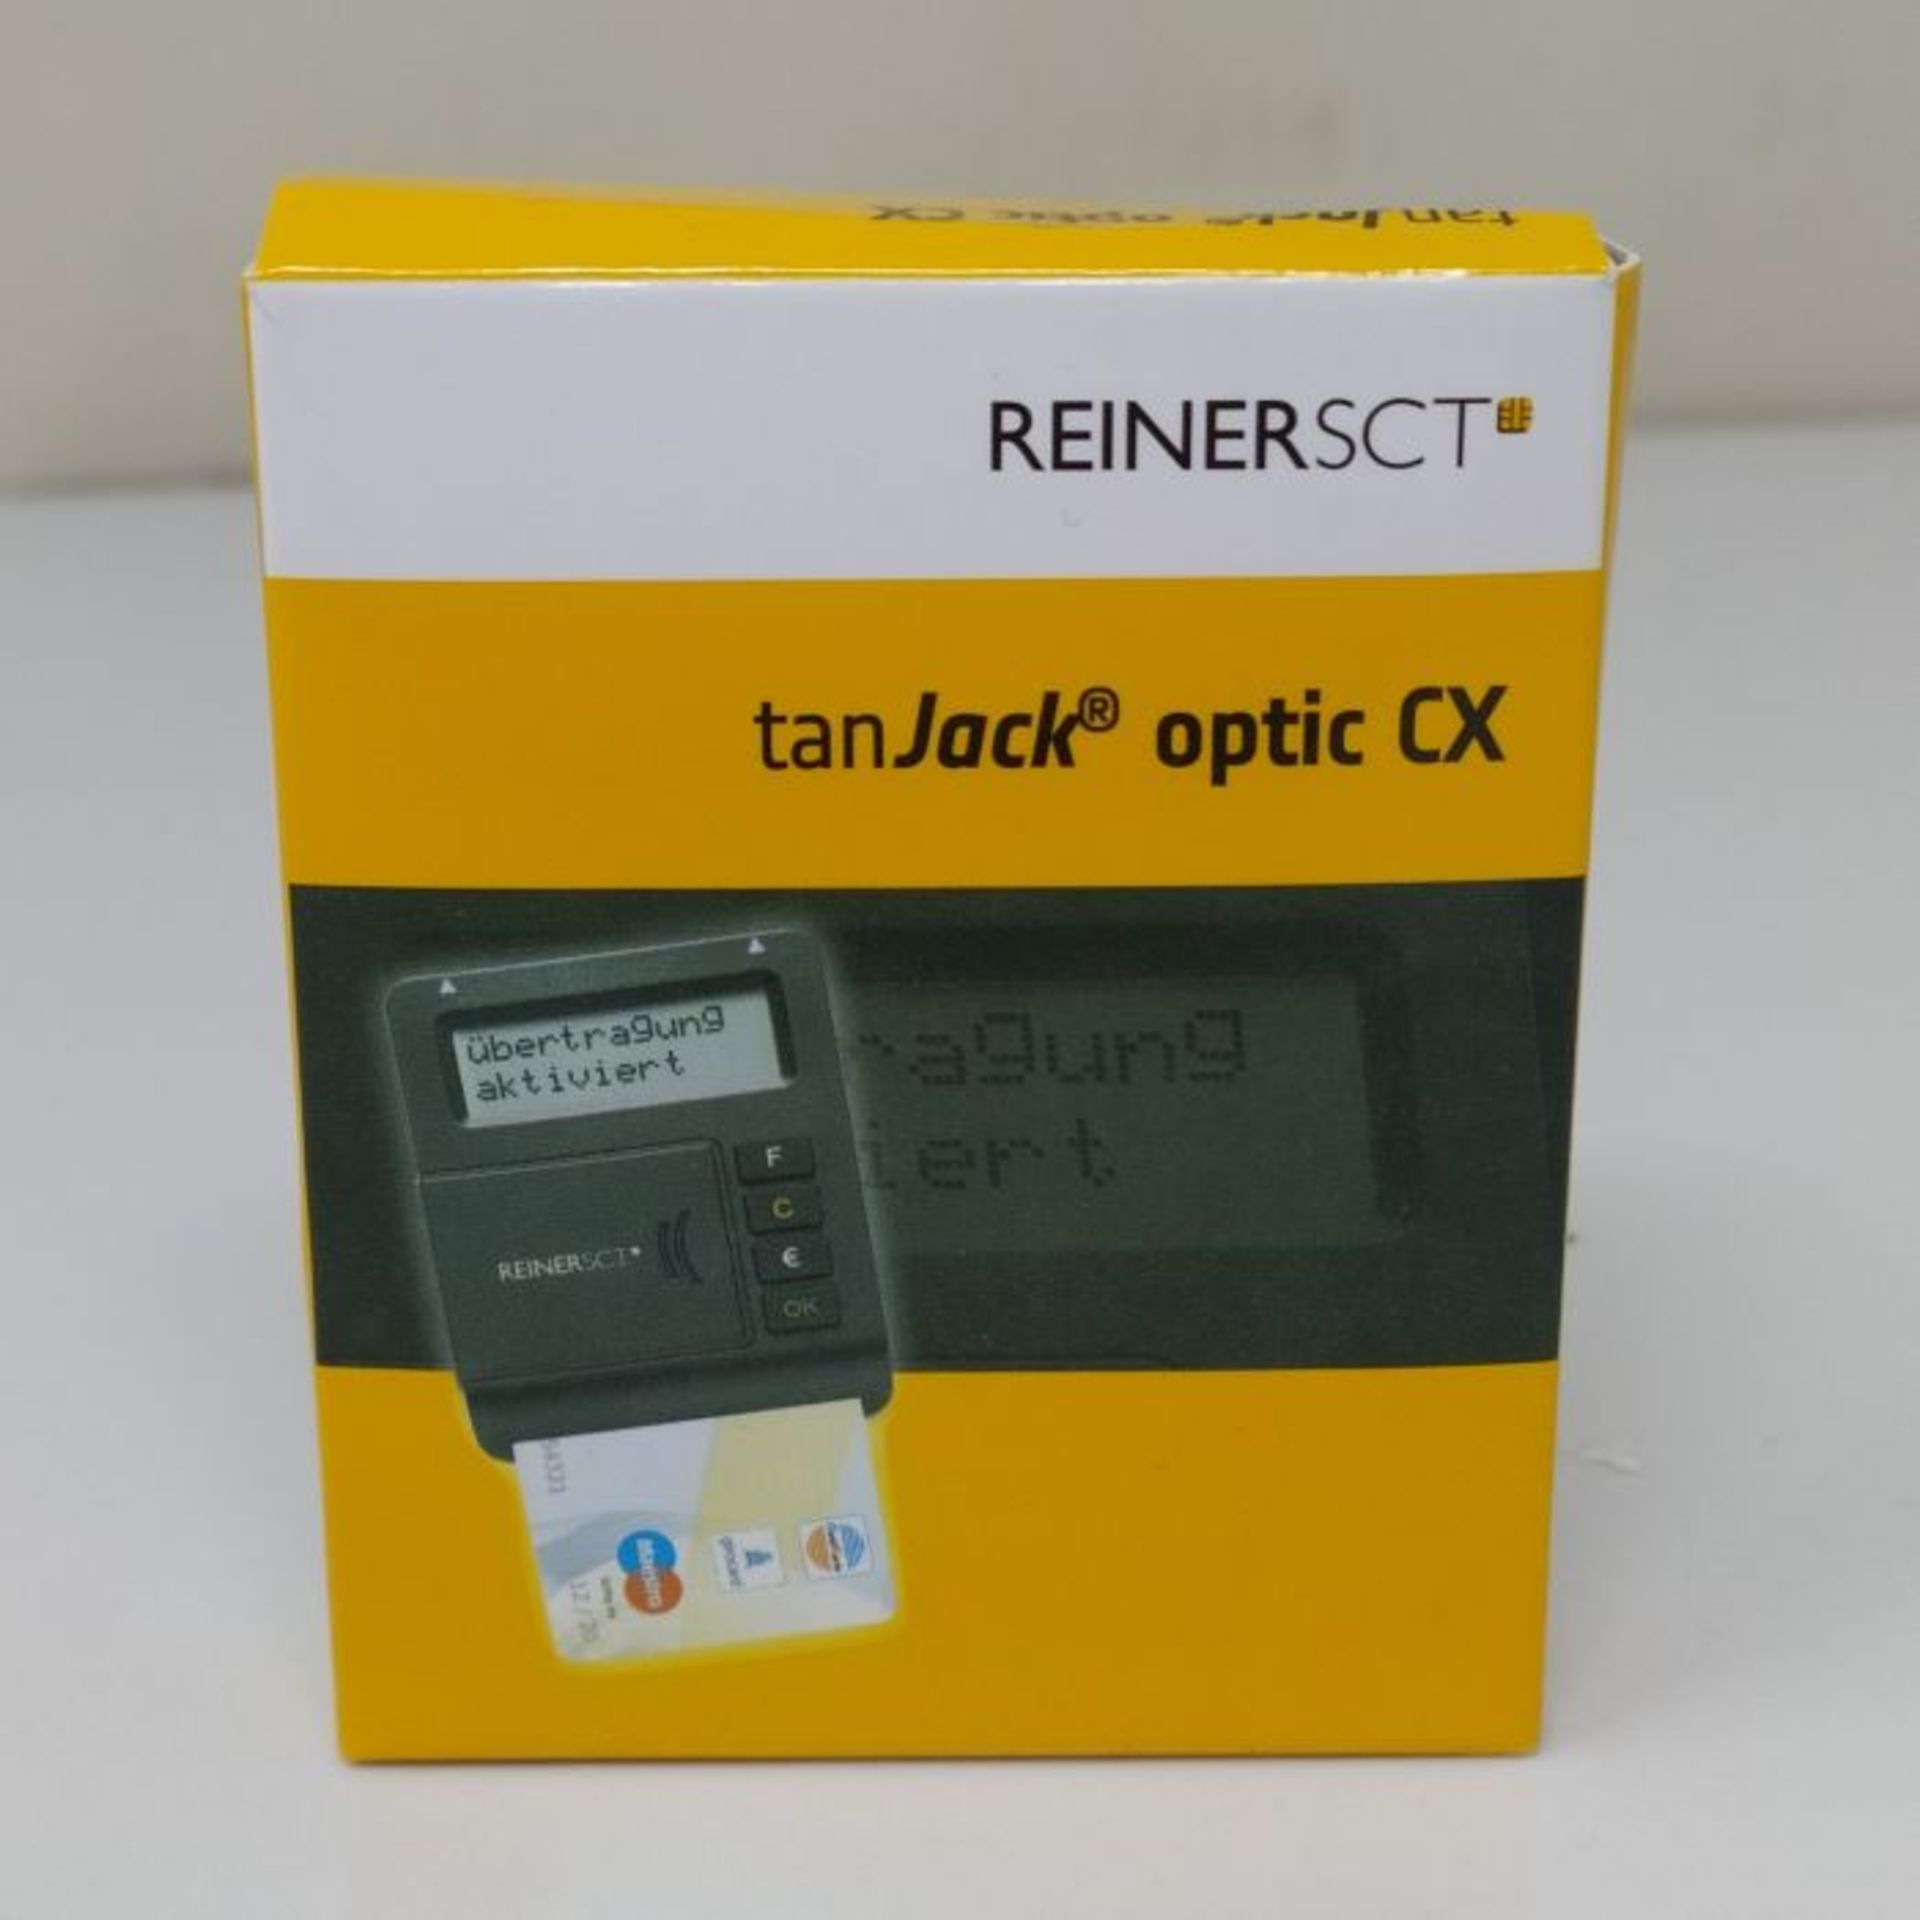 Reiner SCT tanJack Optic CX Optical TAN Generator - Image 2 of 3